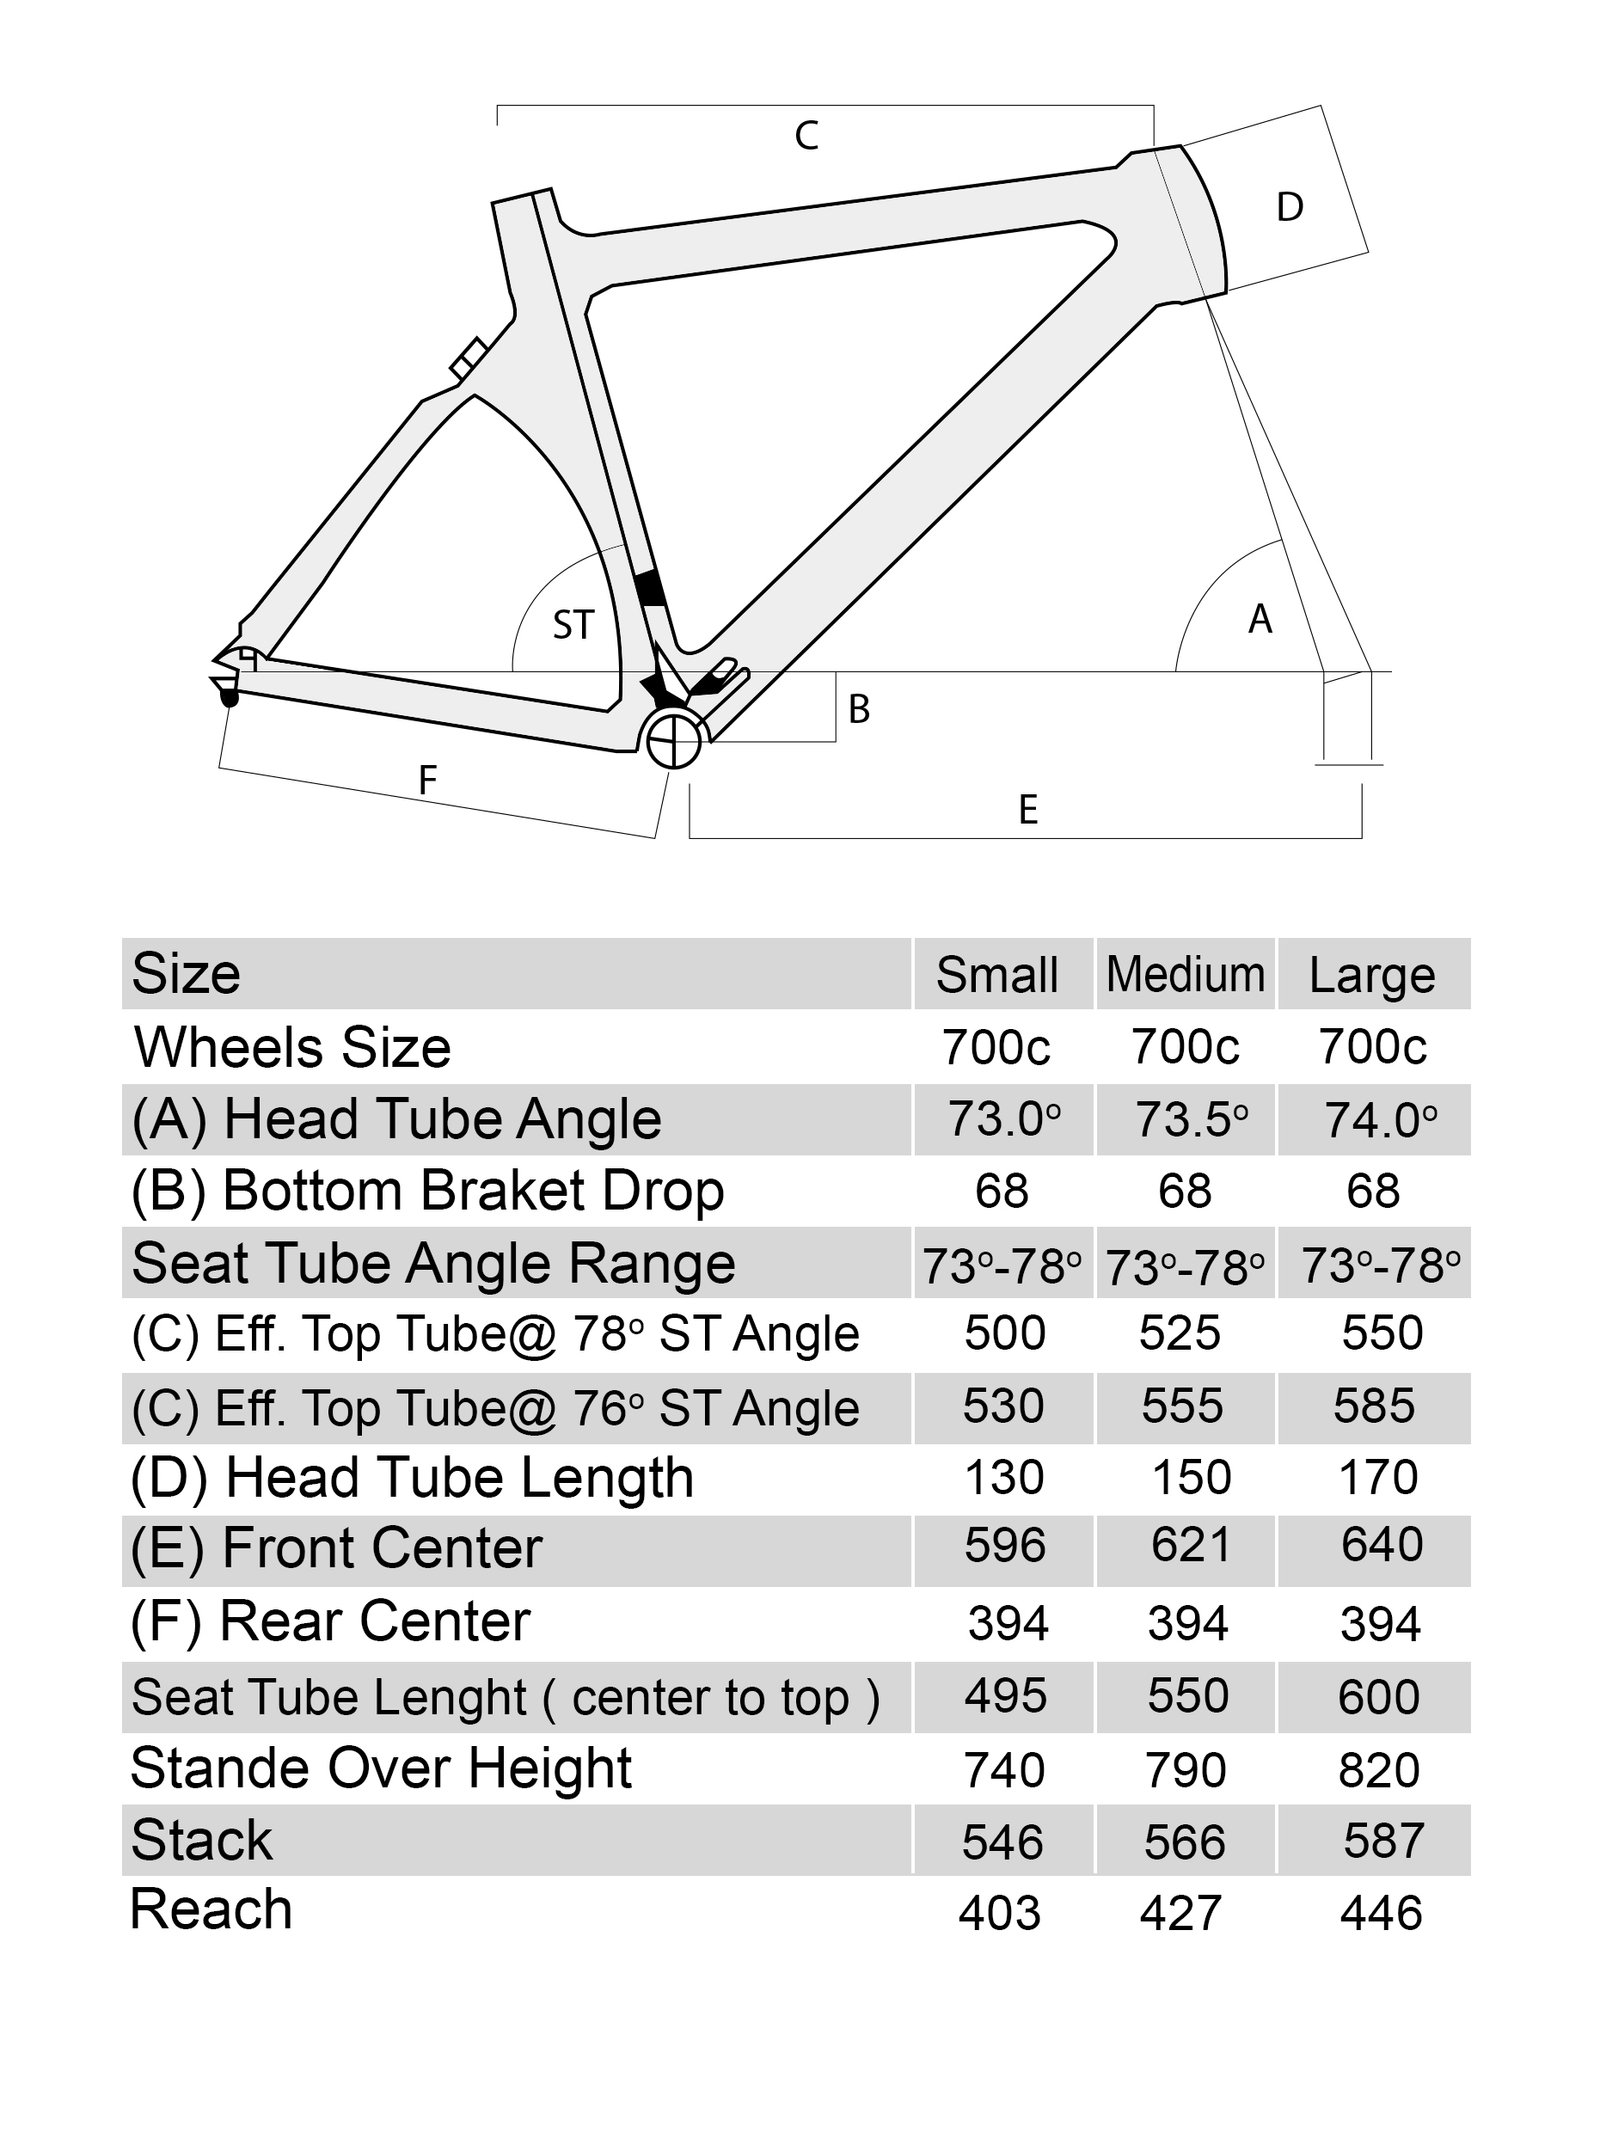 PHX2 triathlon bike geometry